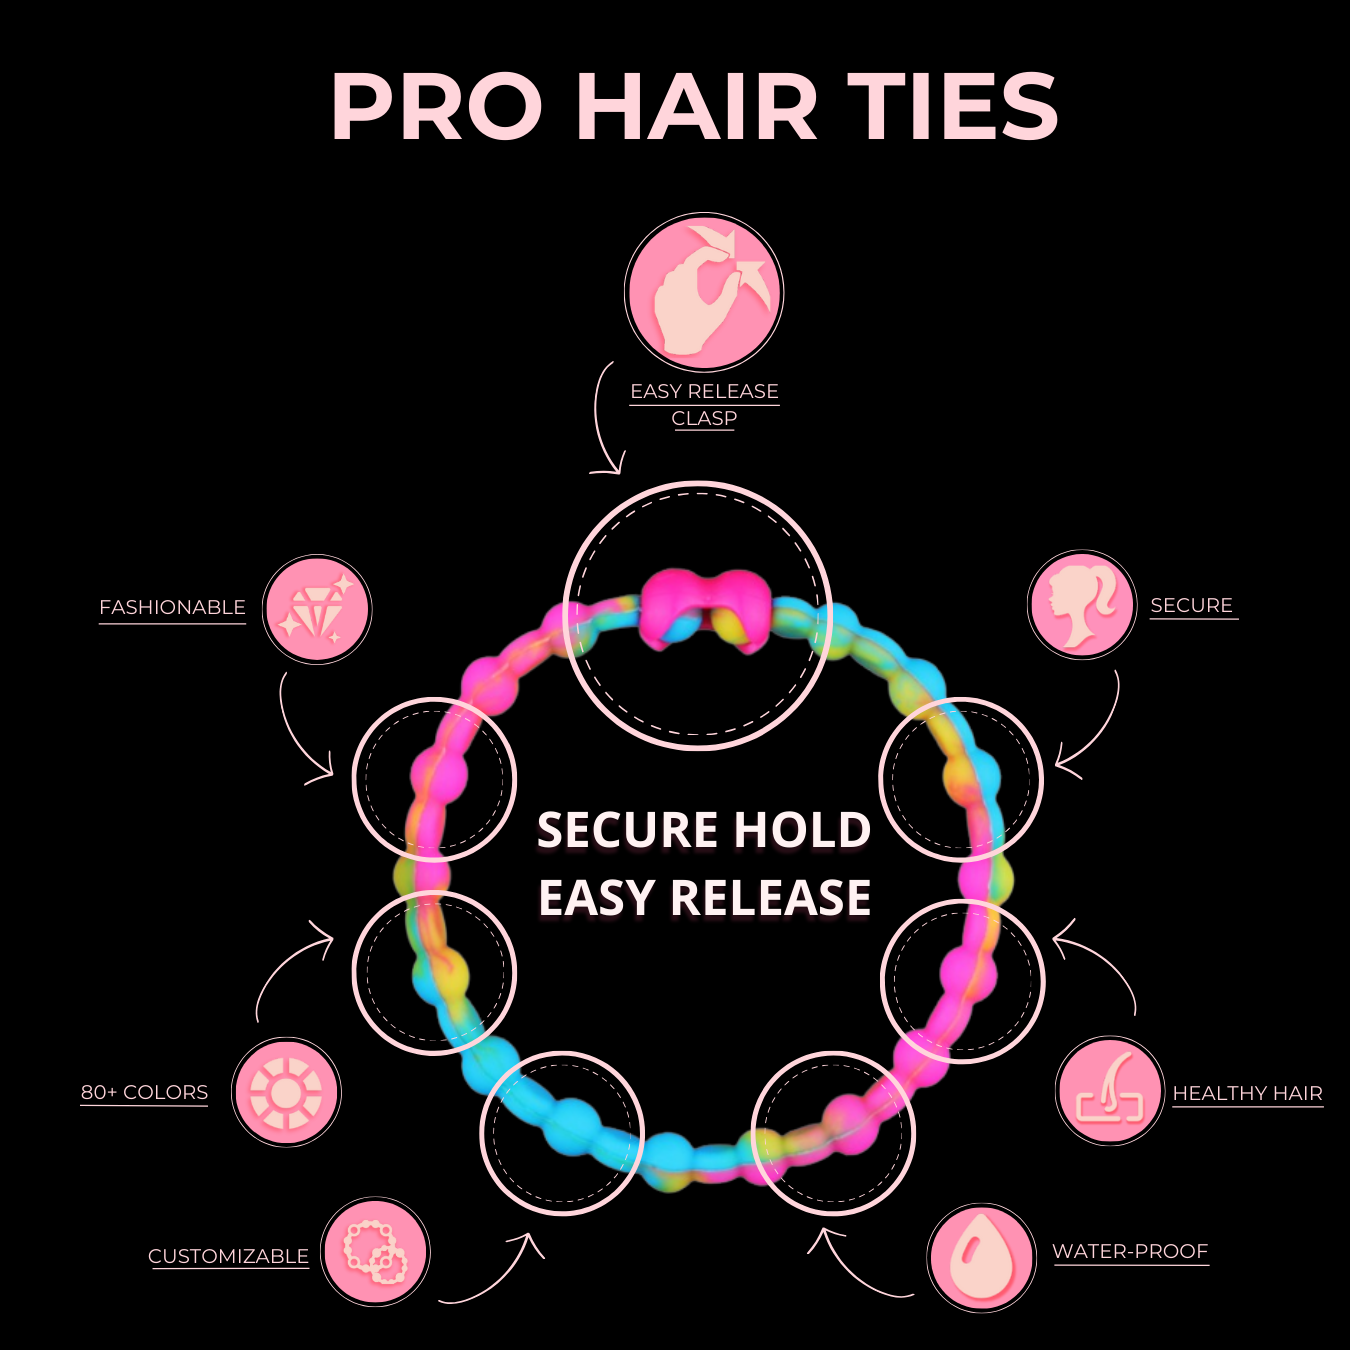 Barley Hair Ties: Easy Release Adjustable for Every Hair Type PACK OF 4